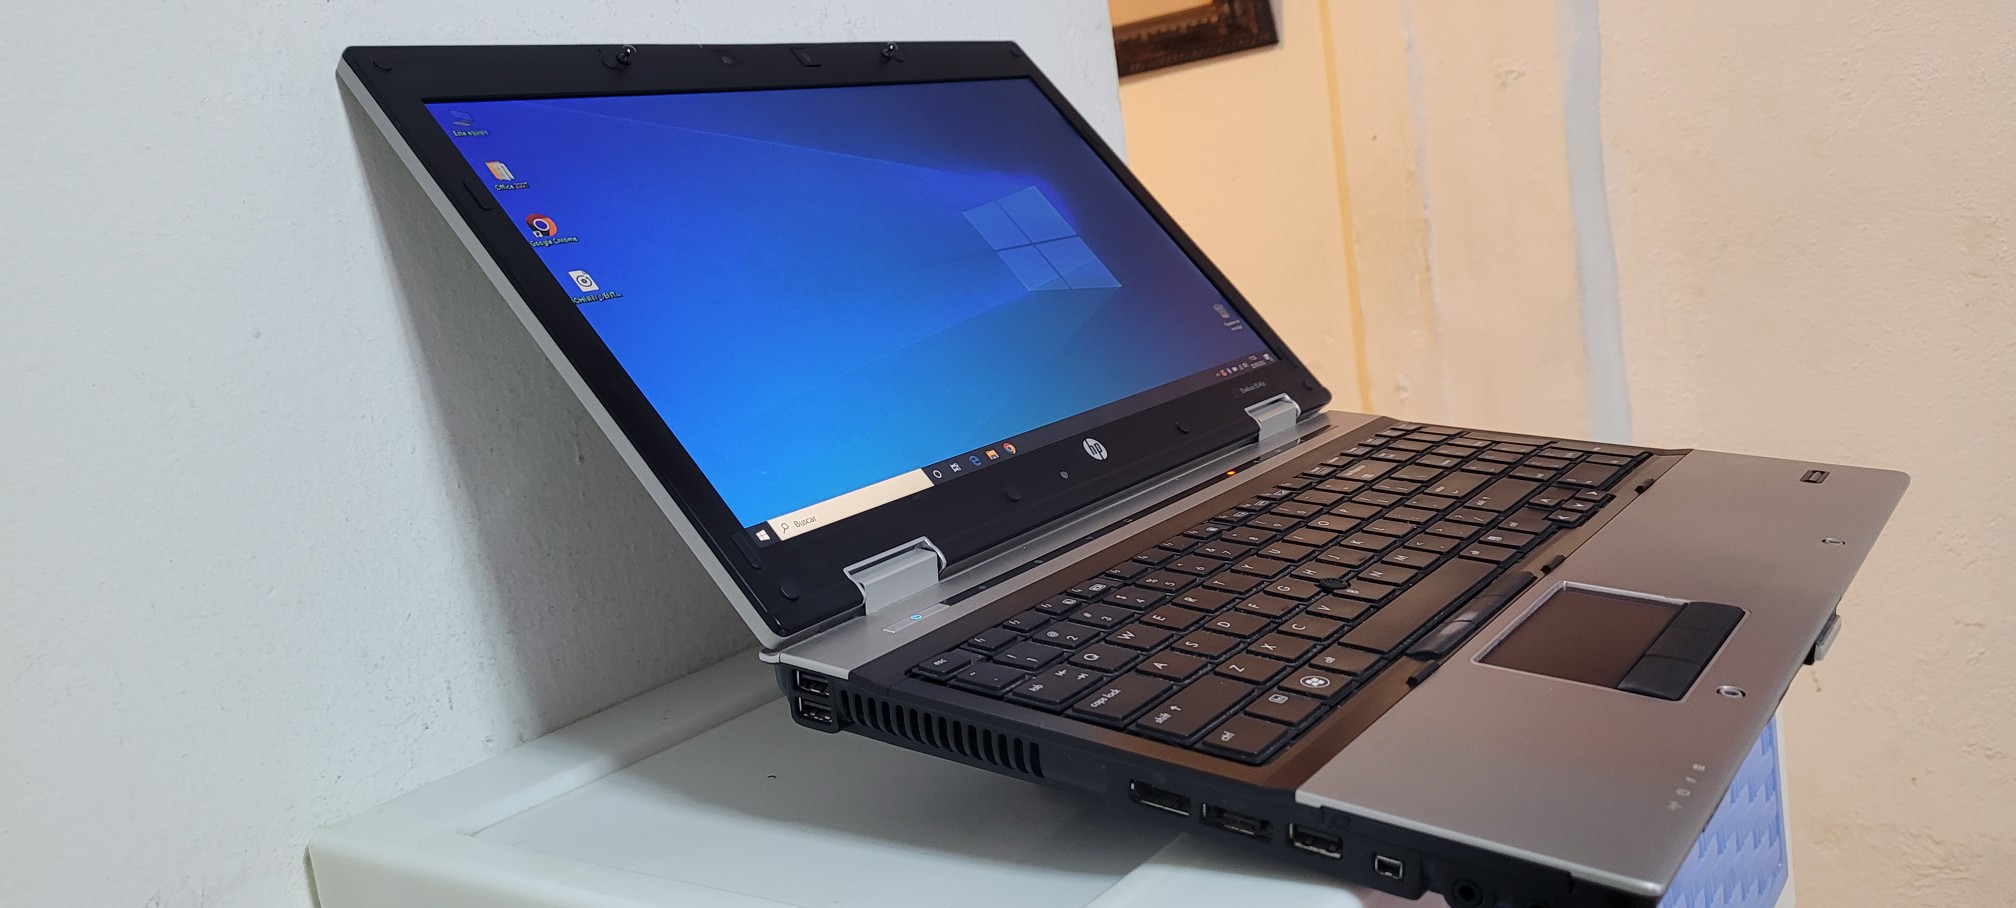 computadoras y laptops - Laptop hp ElitebooK 17 Pulg Core i7 2.8ghz Ram 8gb Disco SSD 128GB Nvidea 4gb 1